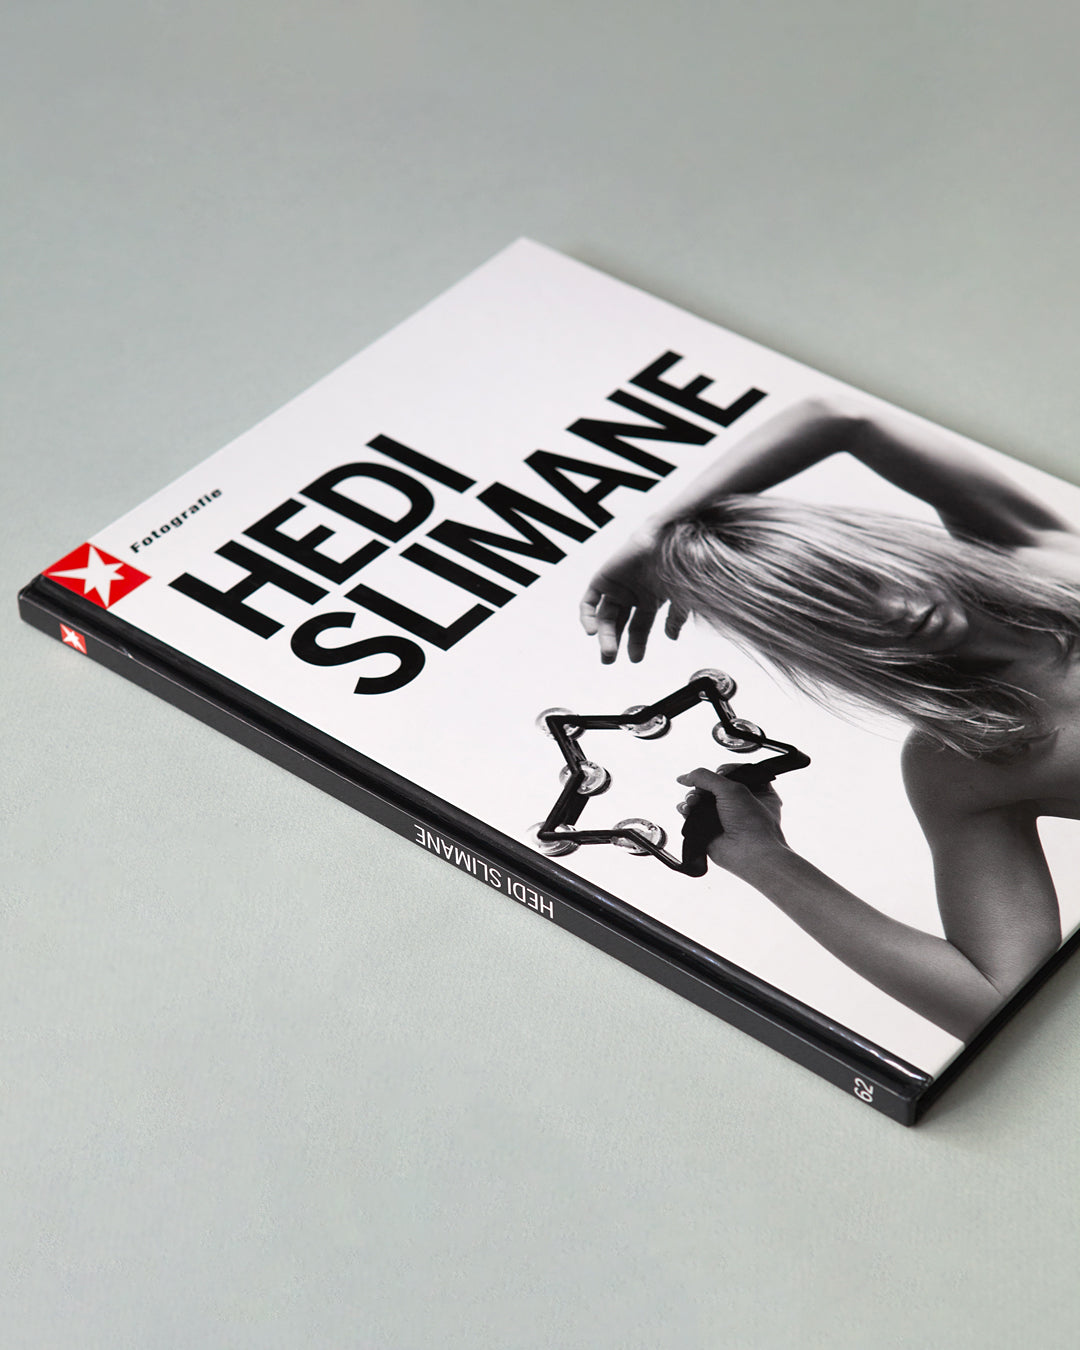 Hedi Slimane - Stern Portfolio 62